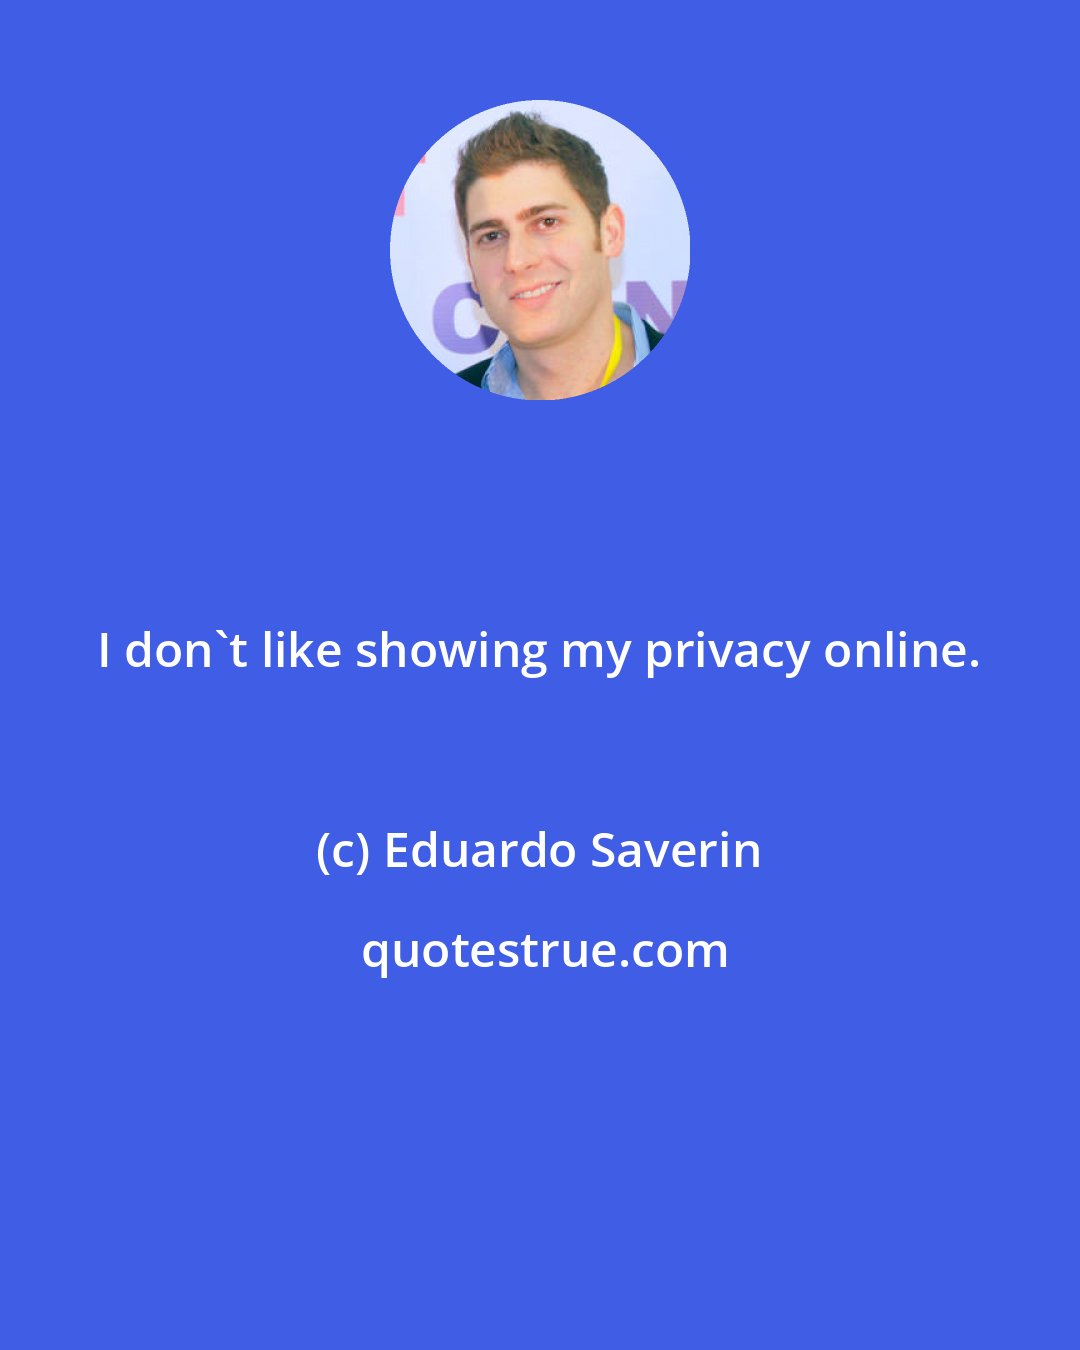 Eduardo Saverin: I don't like showing my privacy online.